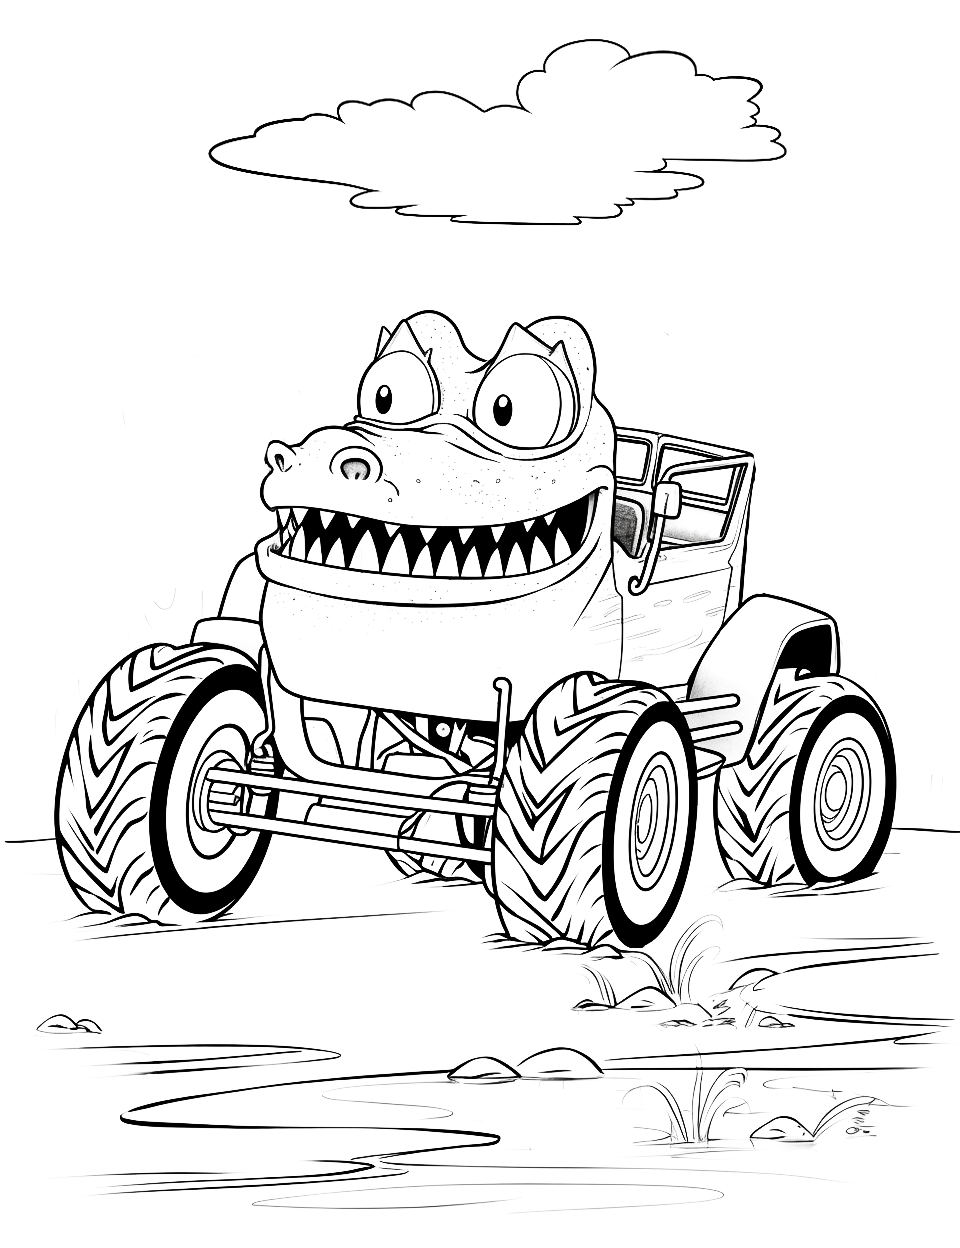 Crocodile's Swamp Swim Monster Truck Coloring Page - A crocodile-themed custom-made monster truck in a swamp